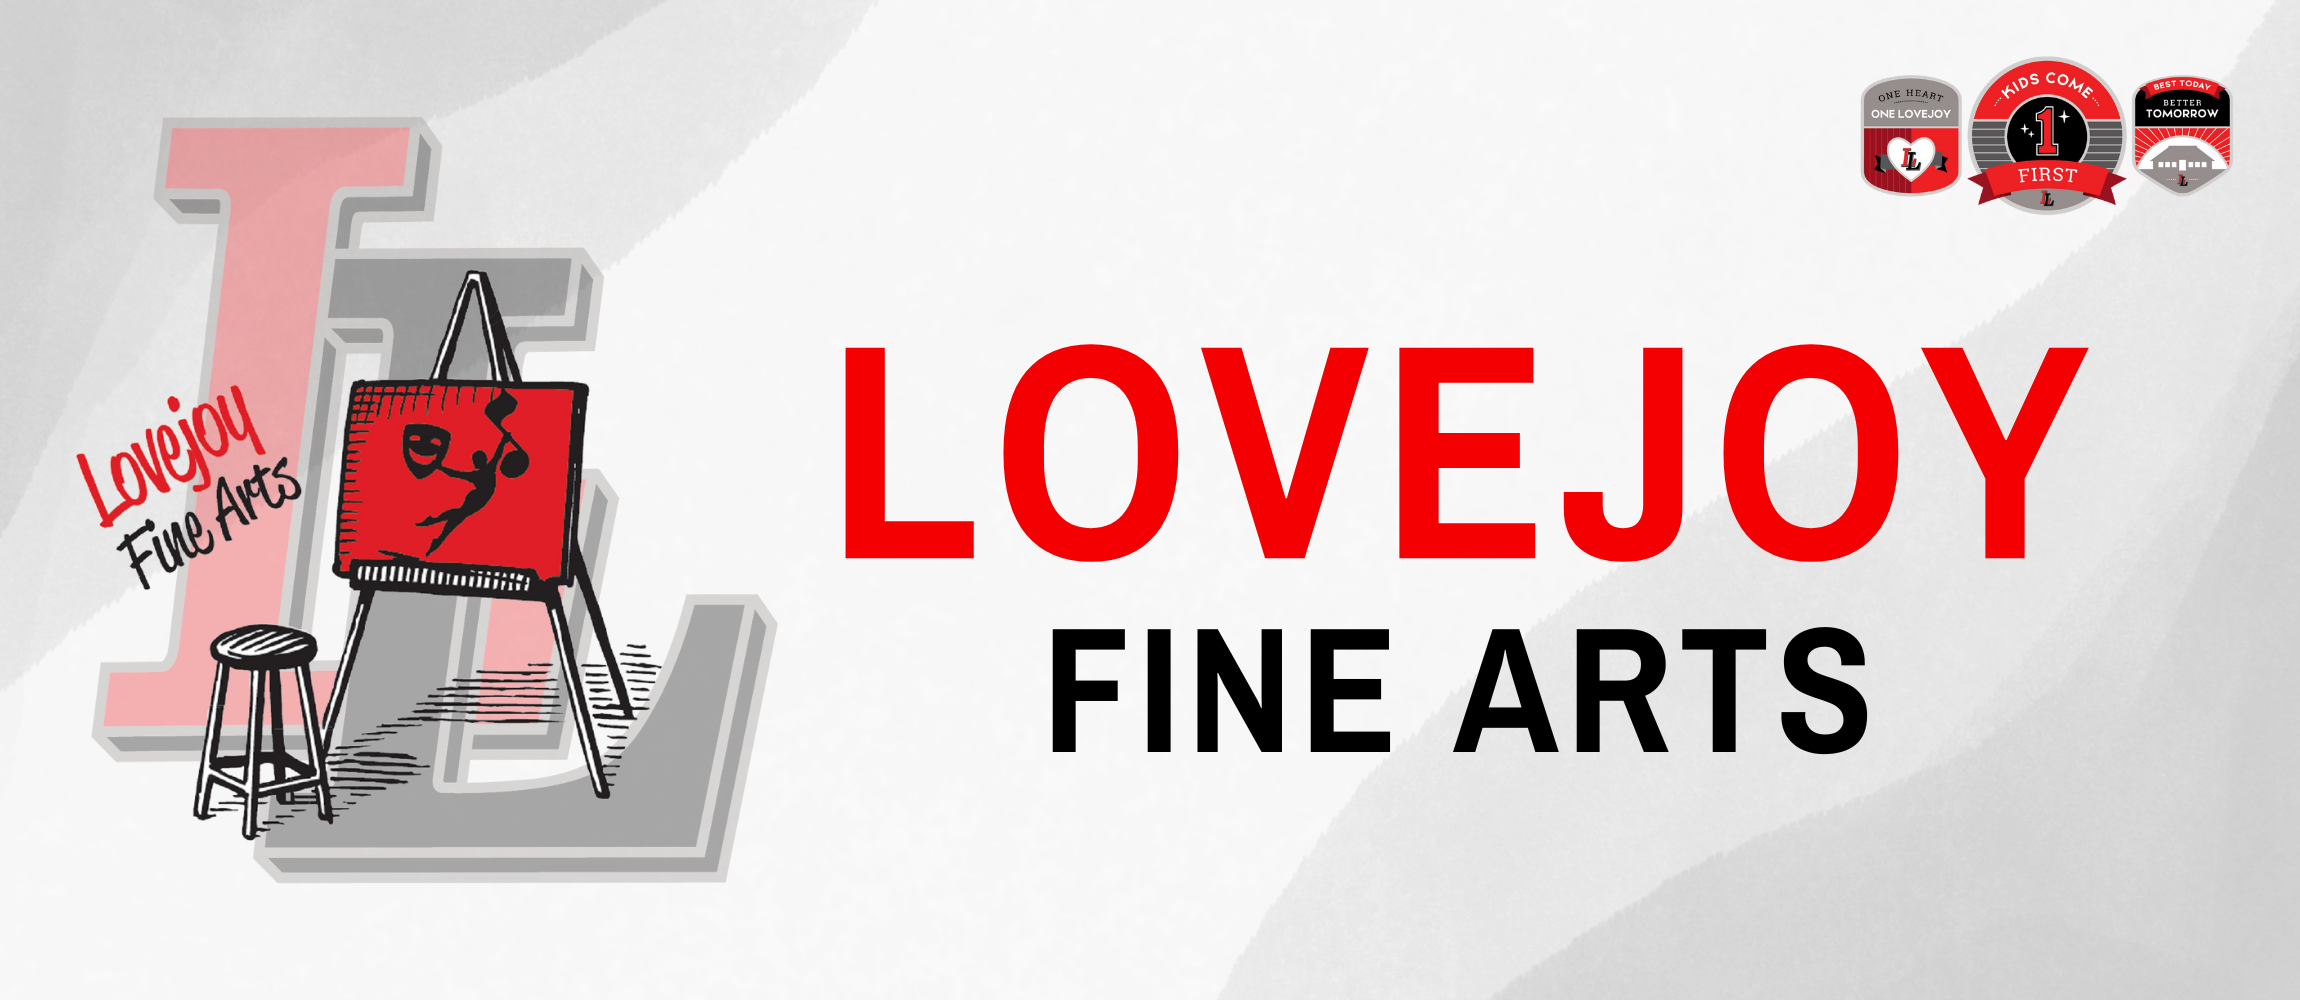 Lovejoy Fine Arts